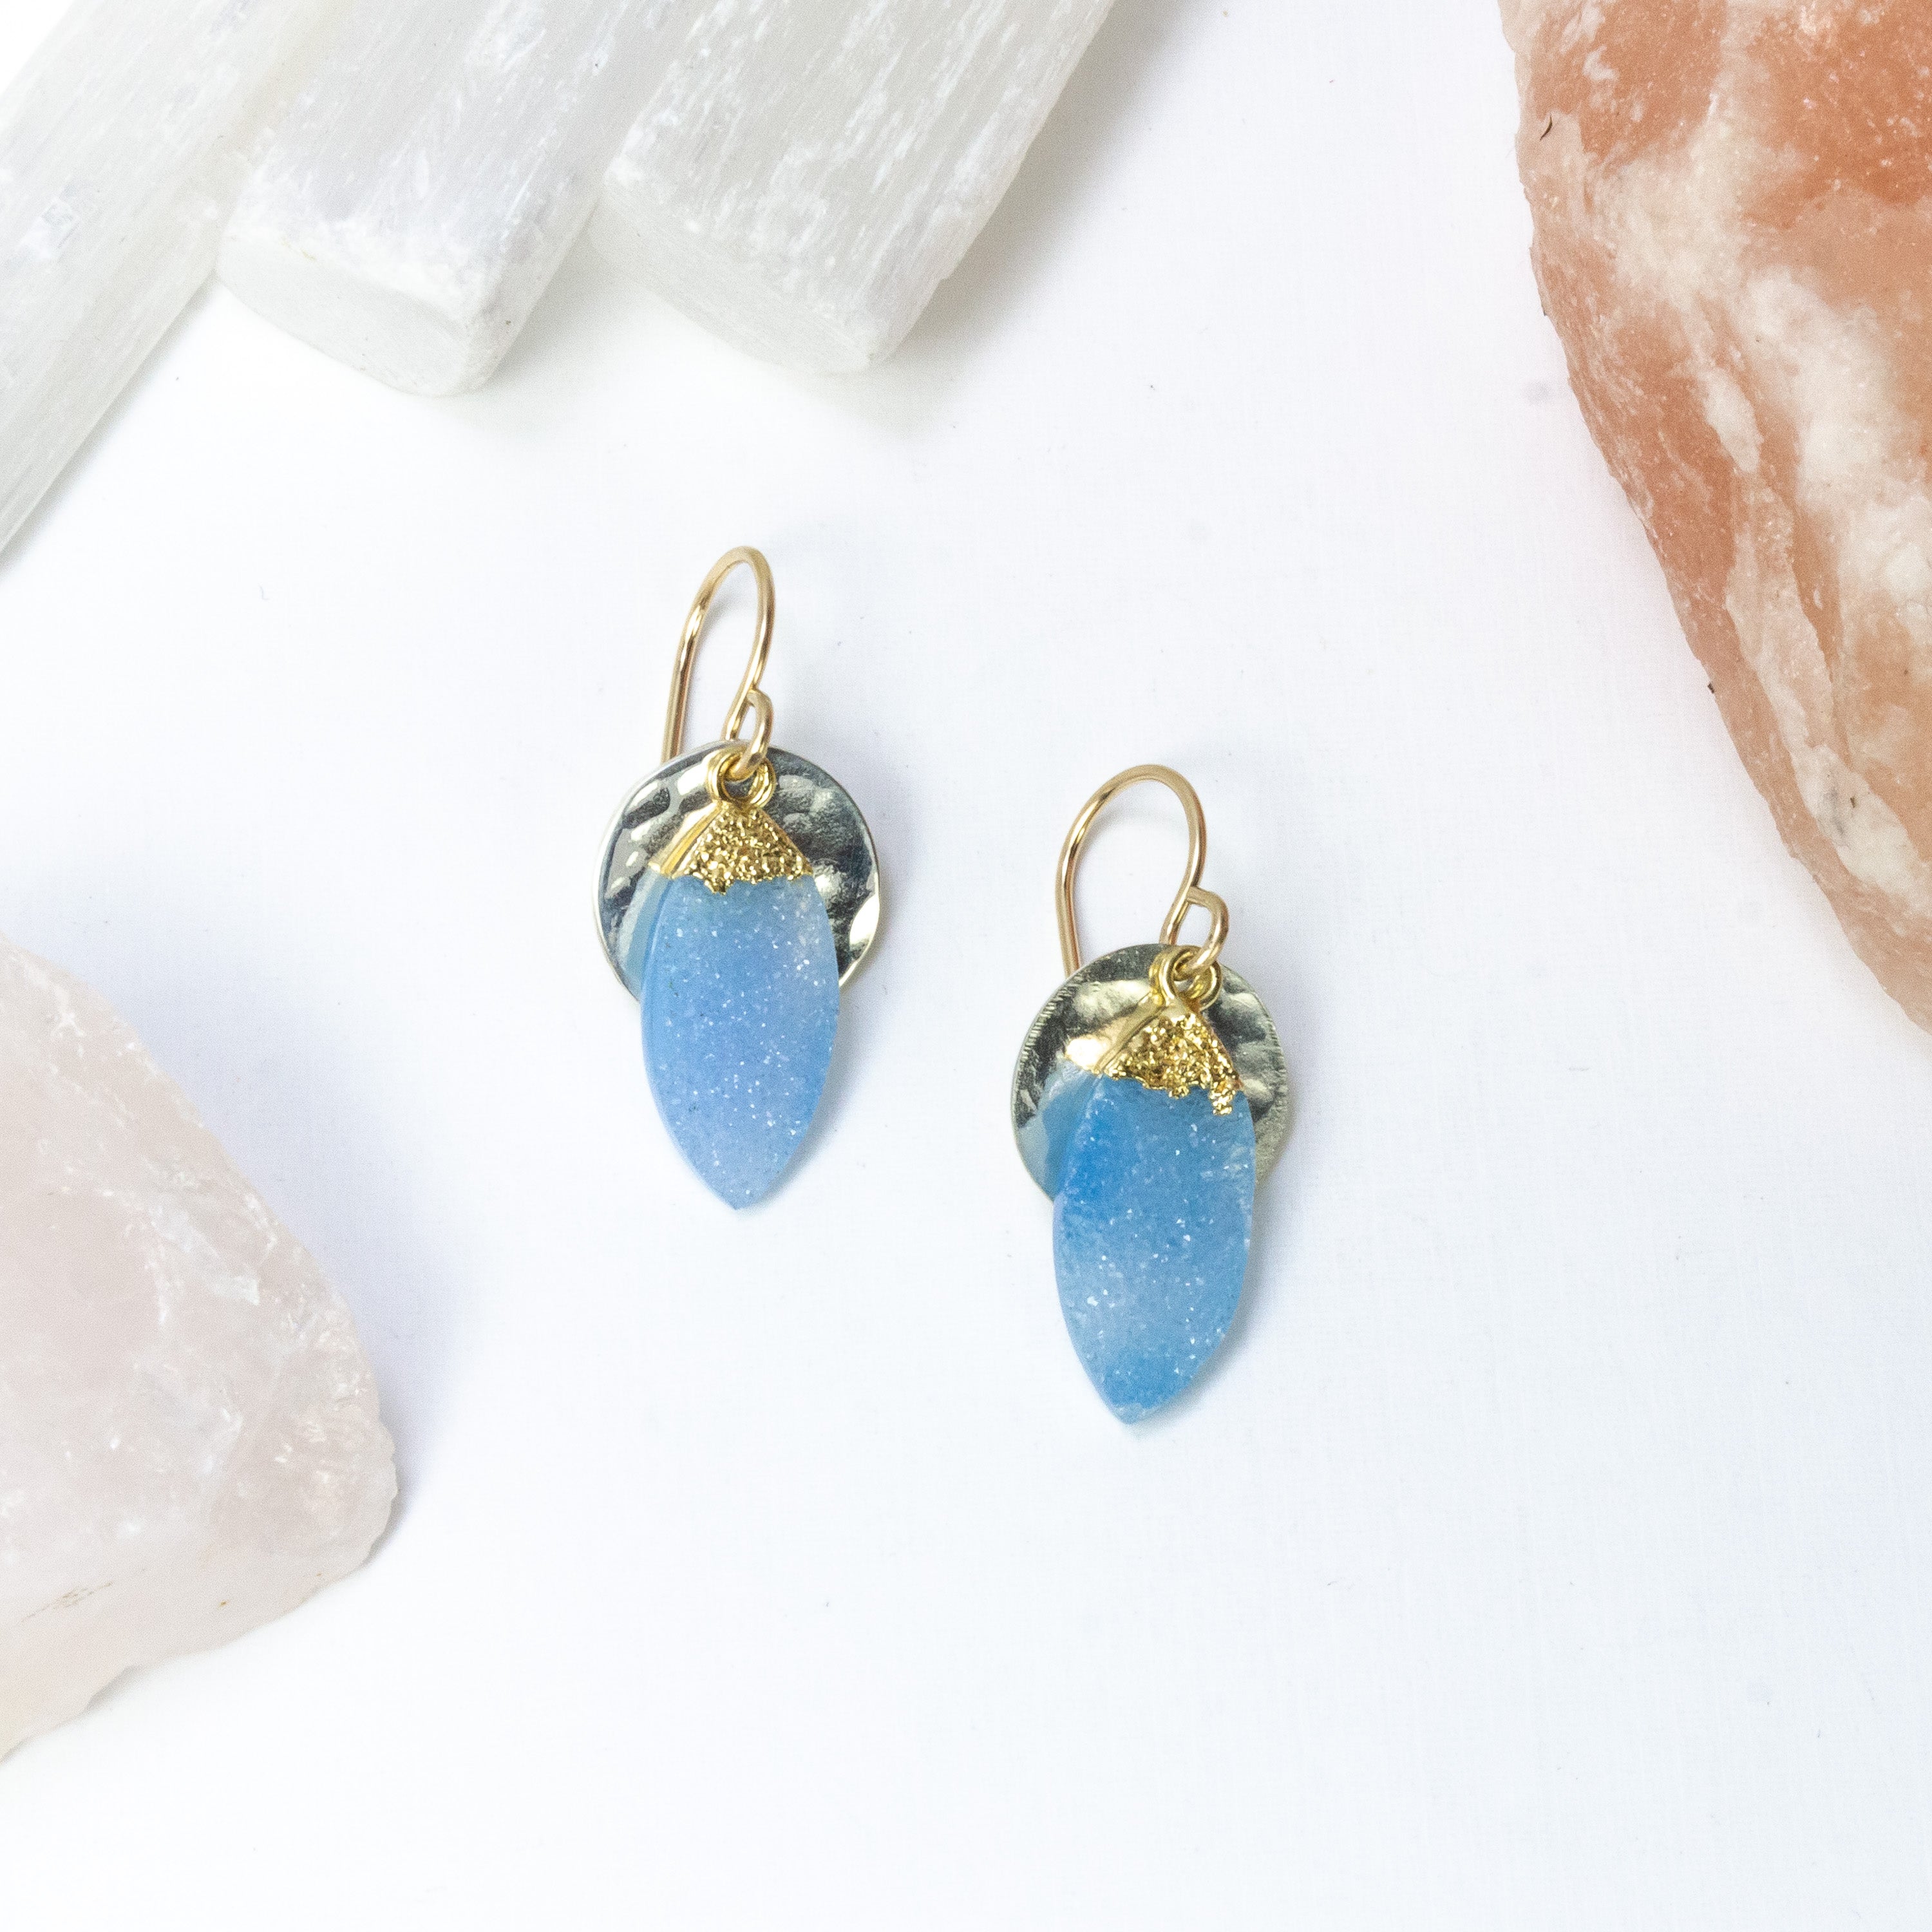 handmade sterling gold filled blue druzy earrings laura j designs